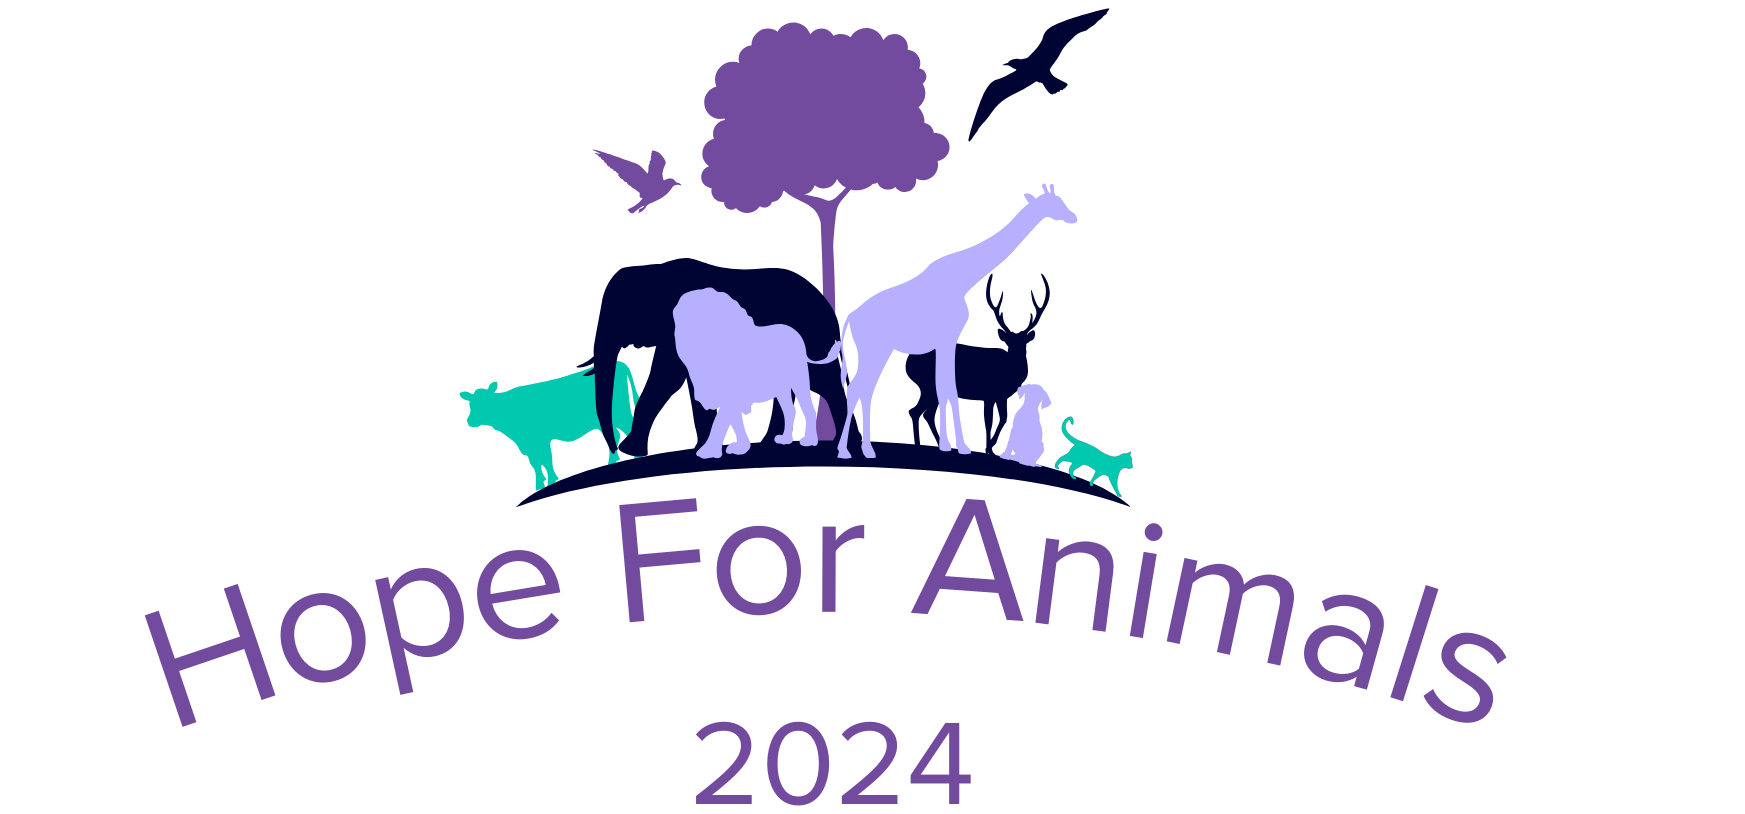 Hope for Animals logo 2024